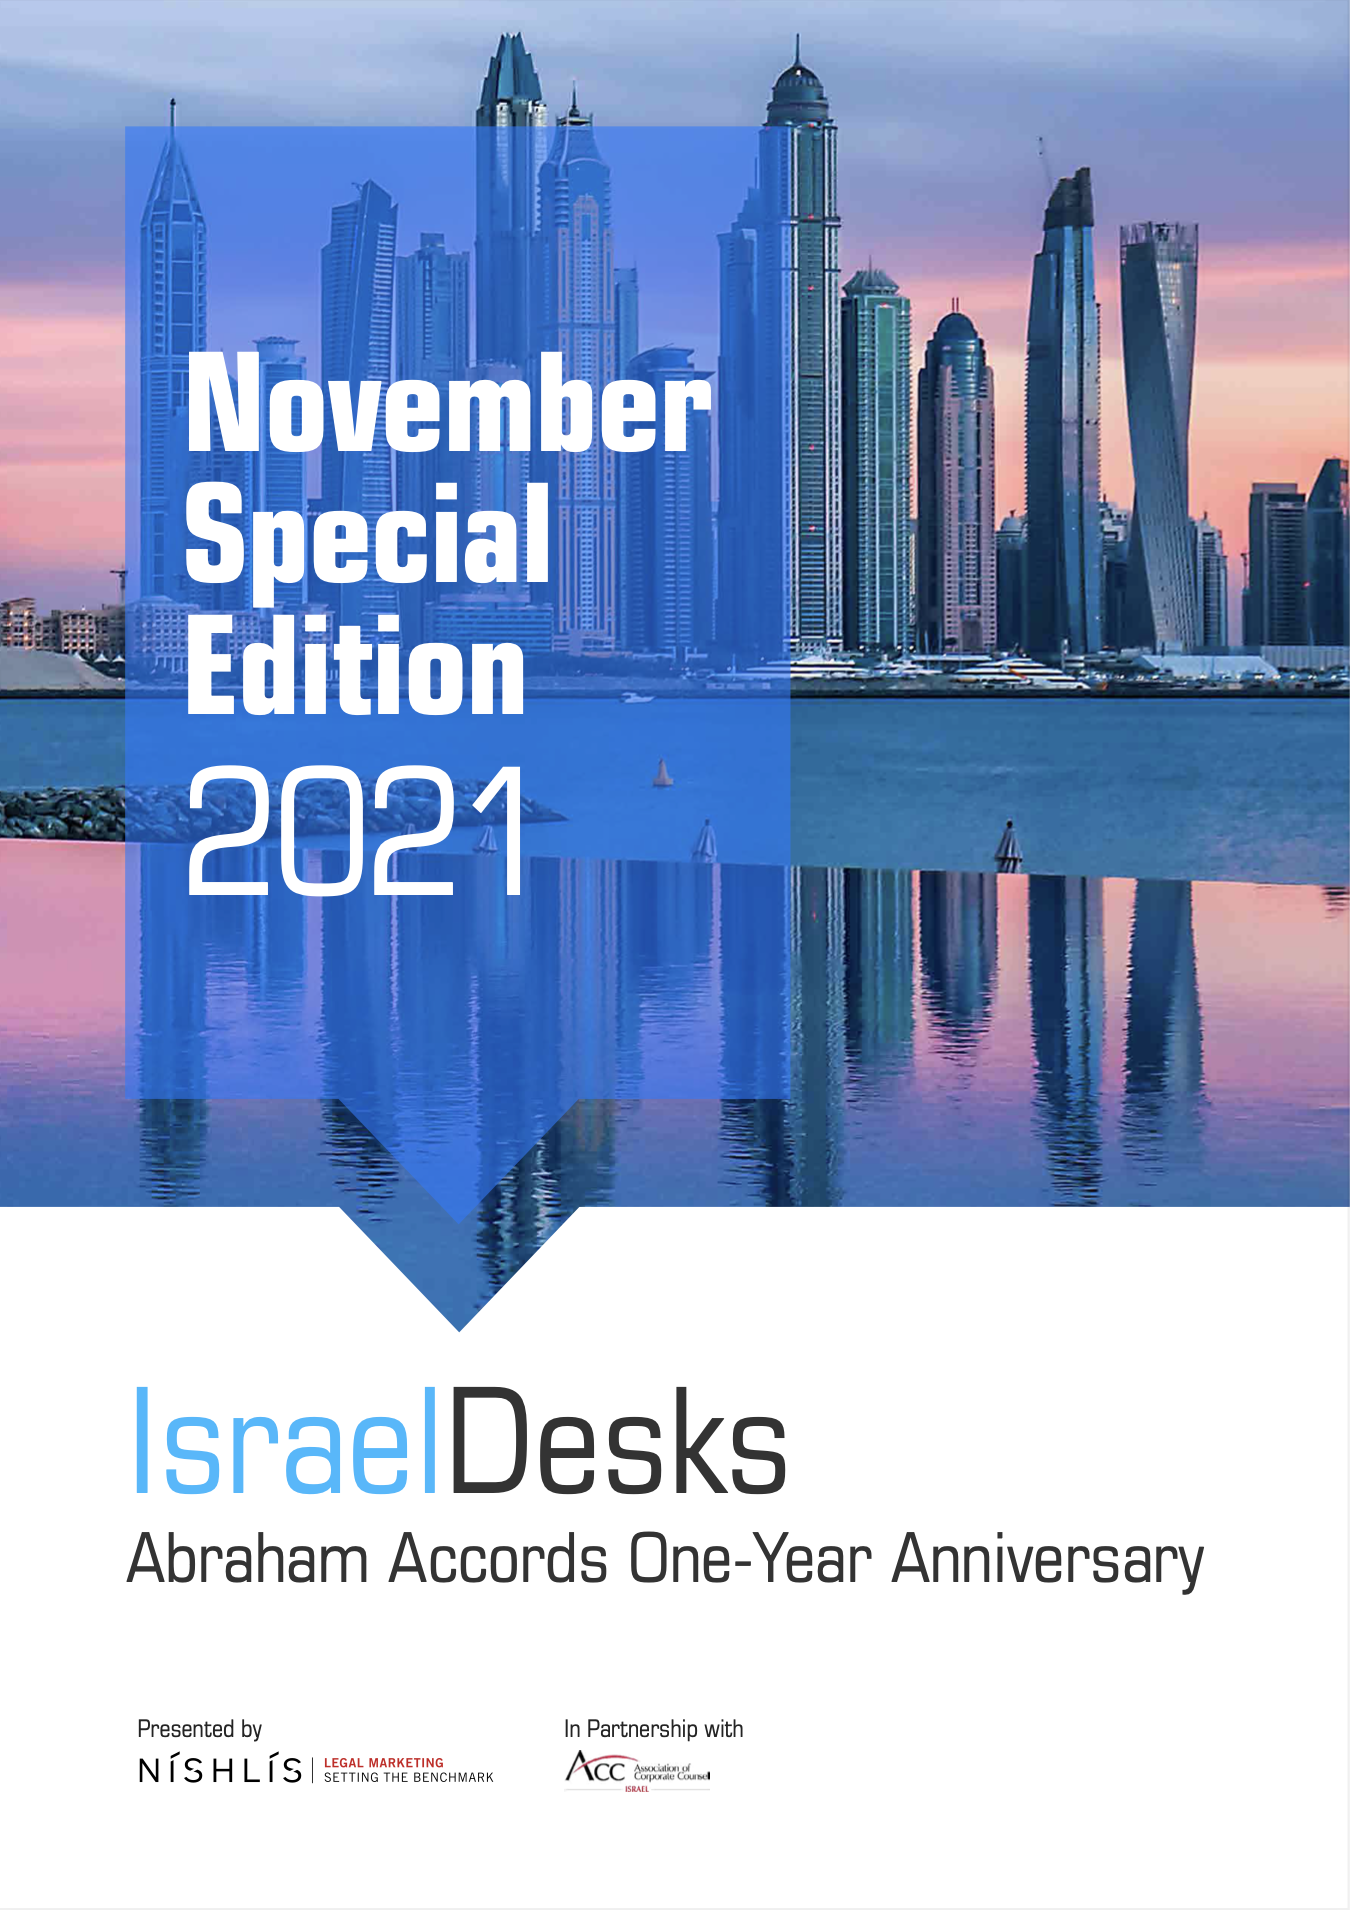 IsraelDesks Magazine – Abraham Accords One-Year Anniversary